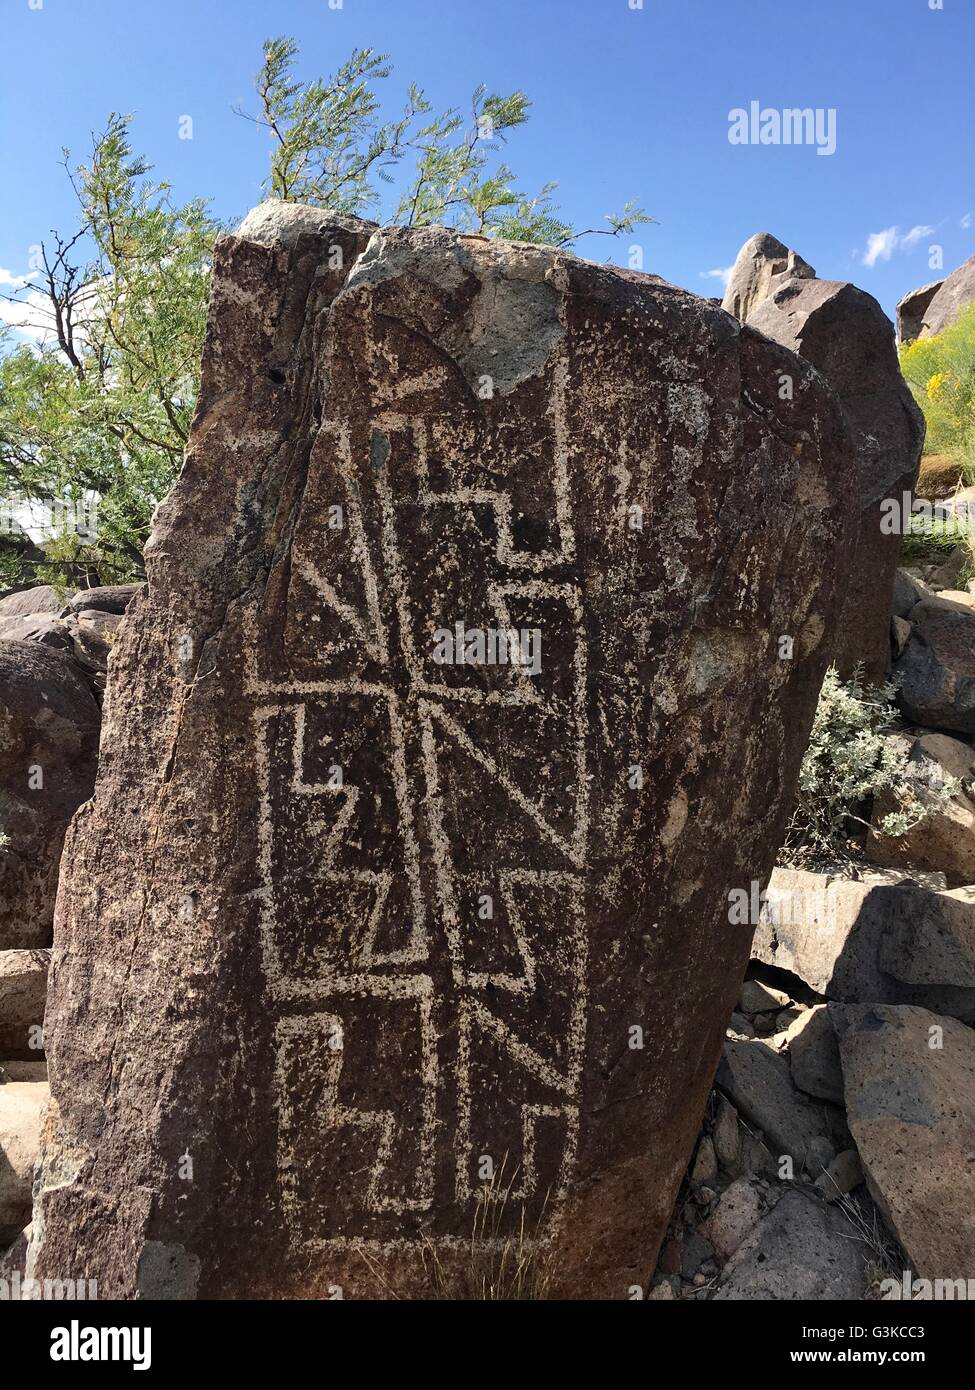 Native Americans carved petroglyphs on rocks at Three Rivers Petroglyph Site near Tularosa, New Mexico Stock Photo